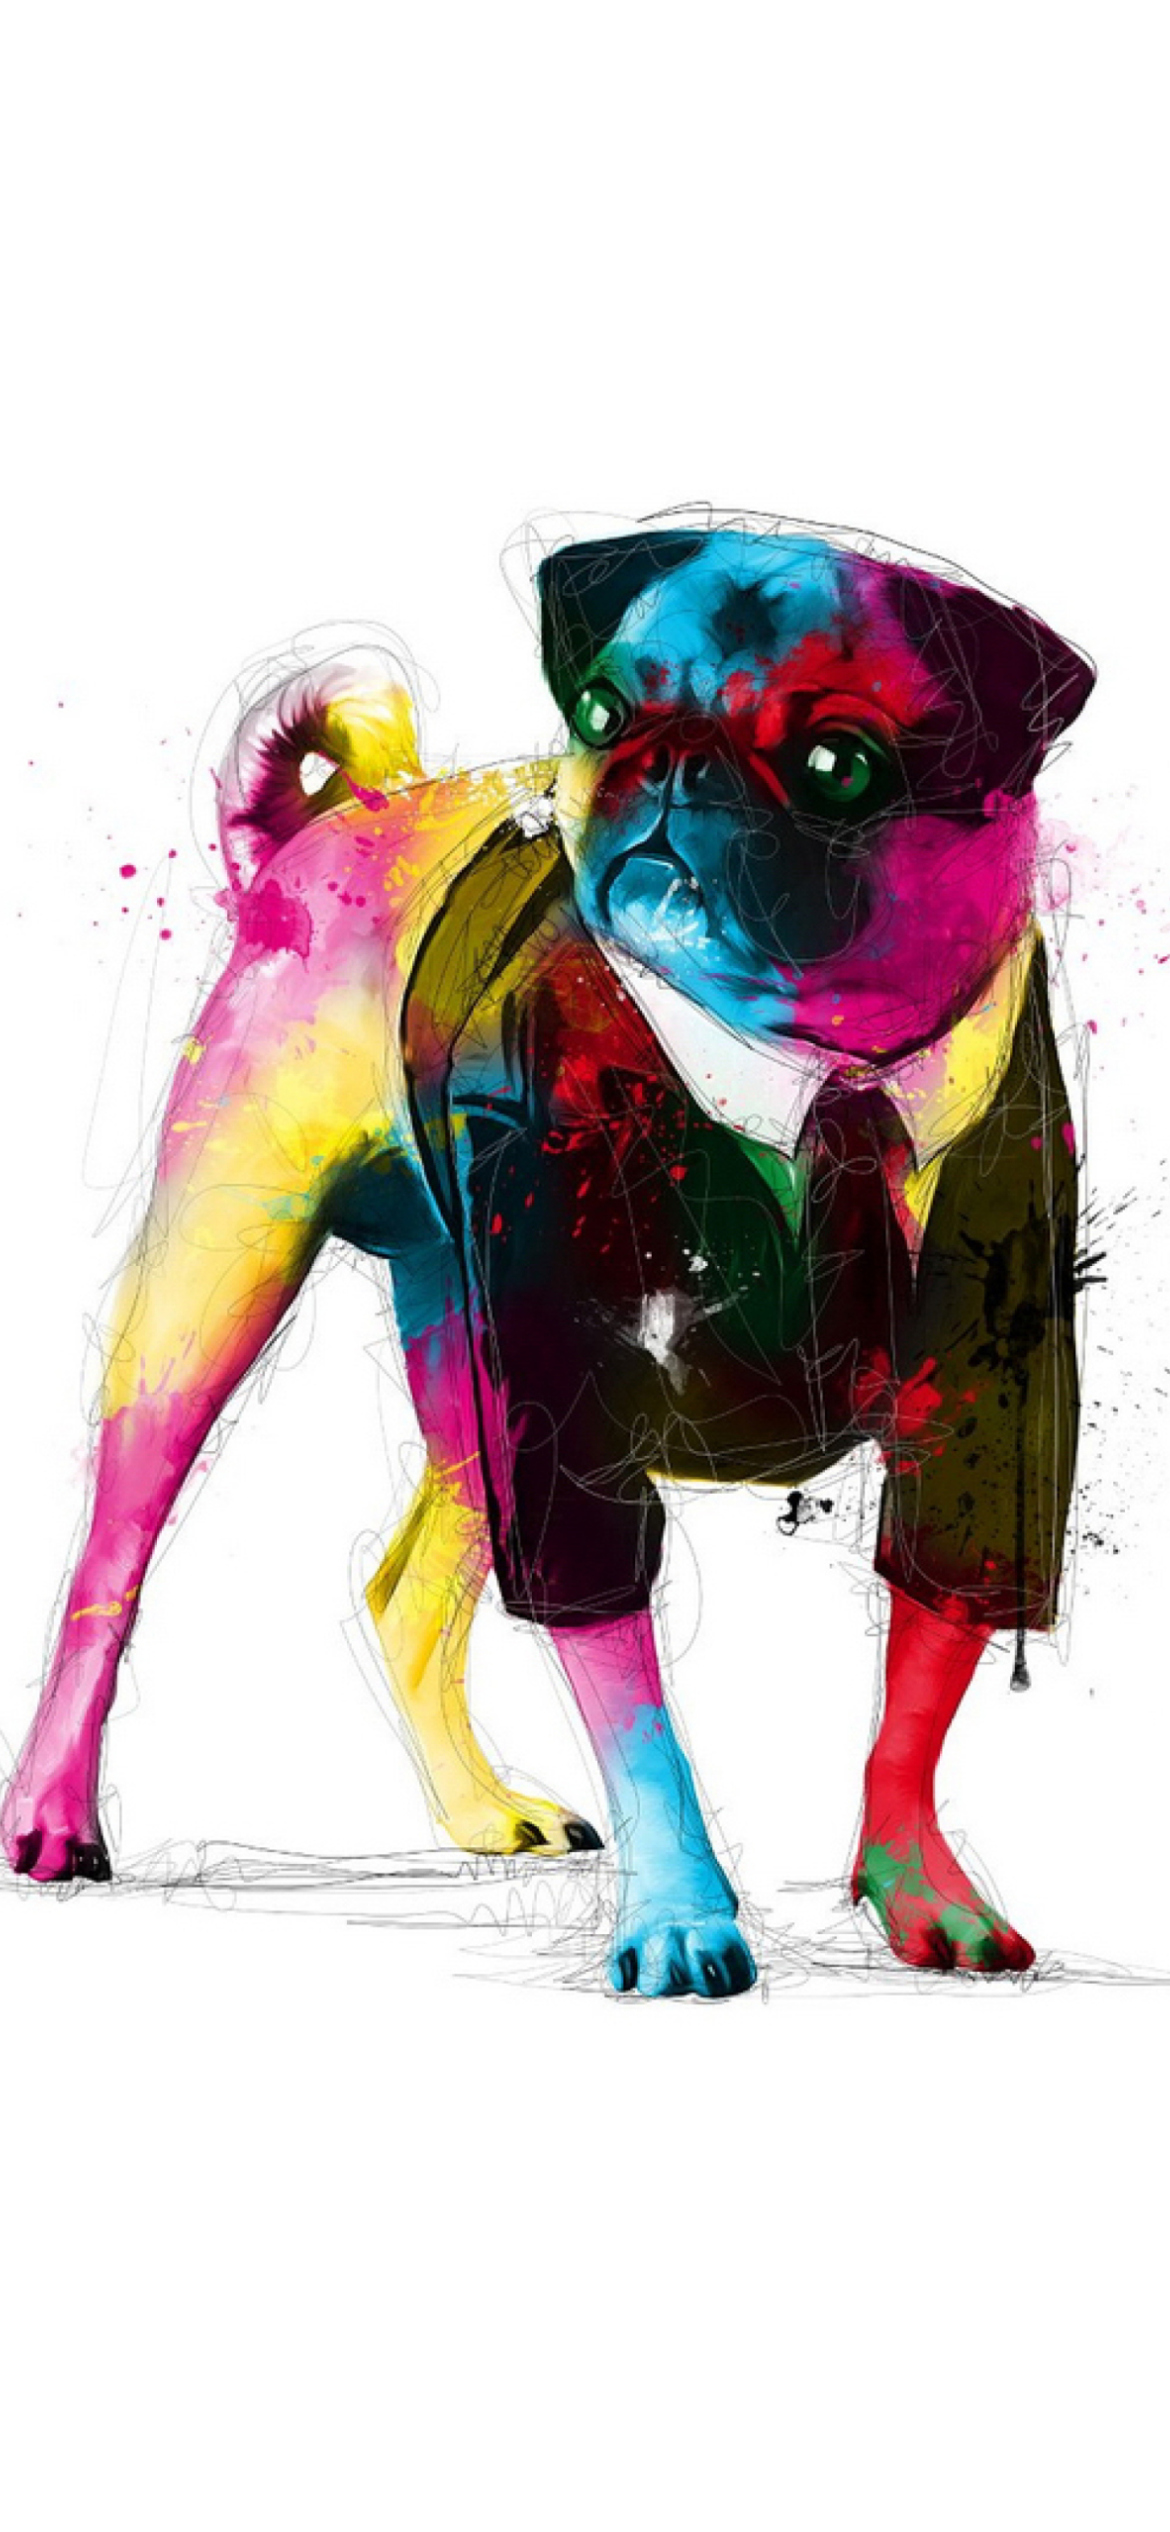 Dog In Suit Illustration wallpaper 1170x2532